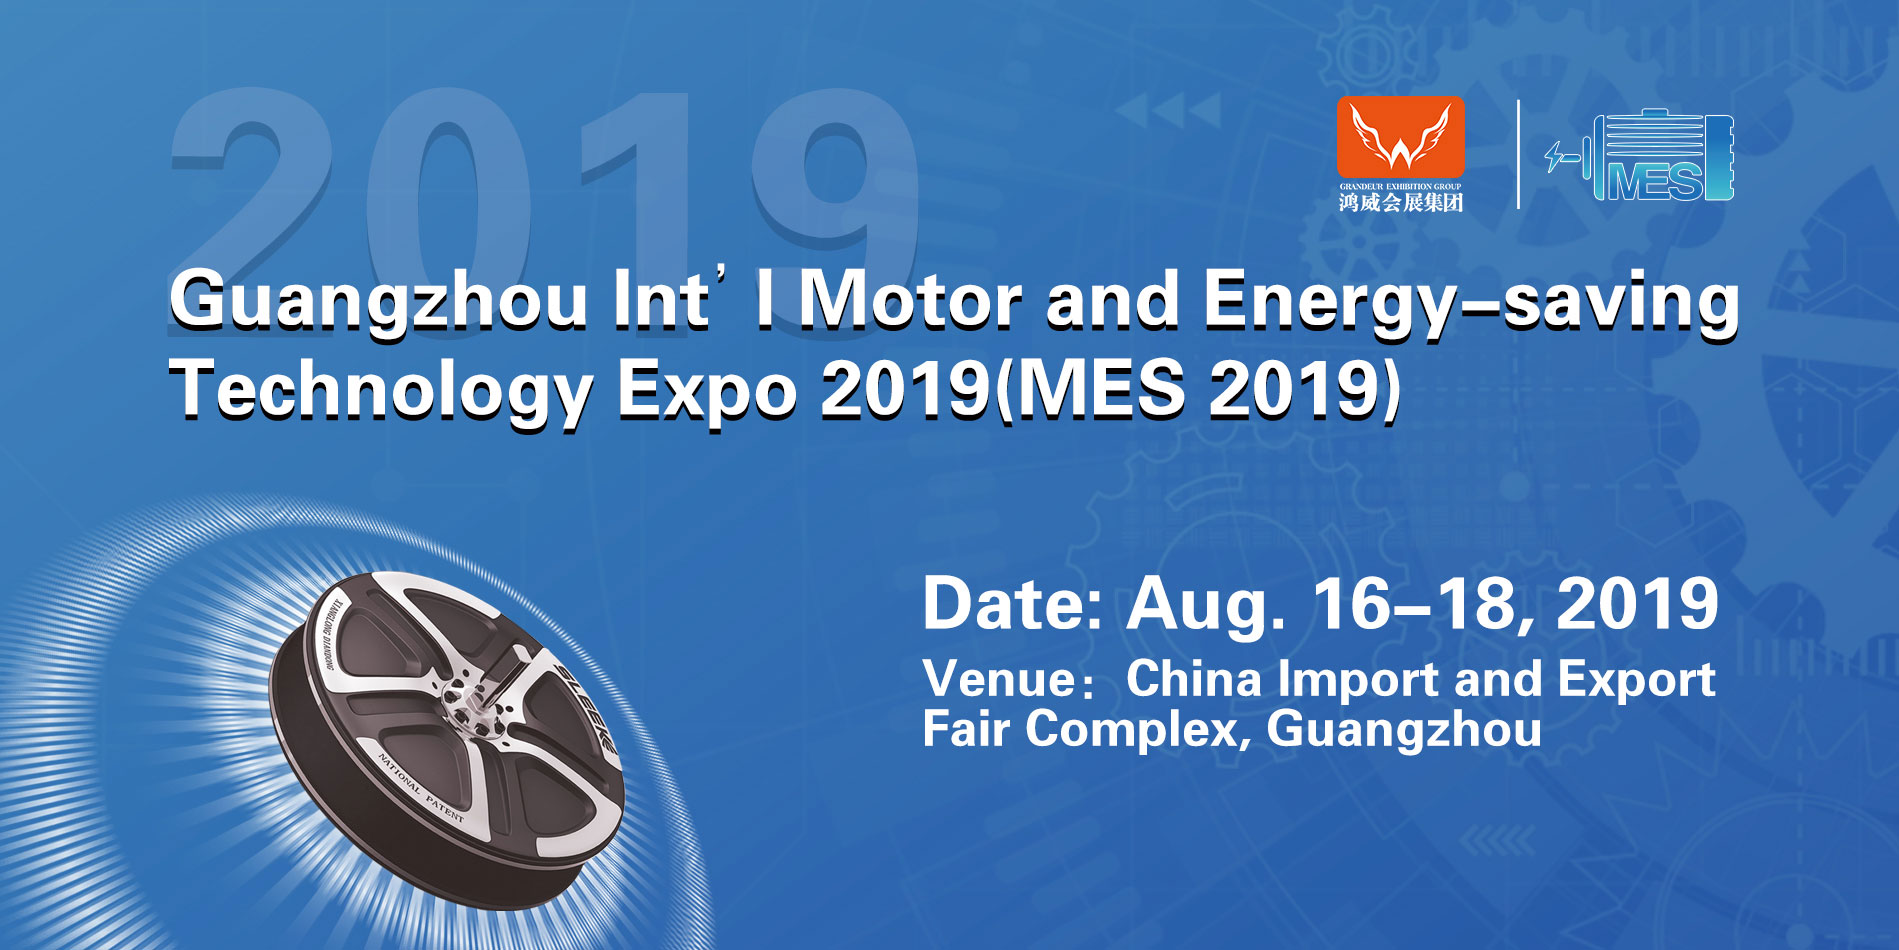 NICHIBO MOTOR (SHENZHEN) ATTENDS GUANGZHOU INTERNATIONAL MOTOR & ENERGY-SAVING TECHNOLOGY EXPO 2019